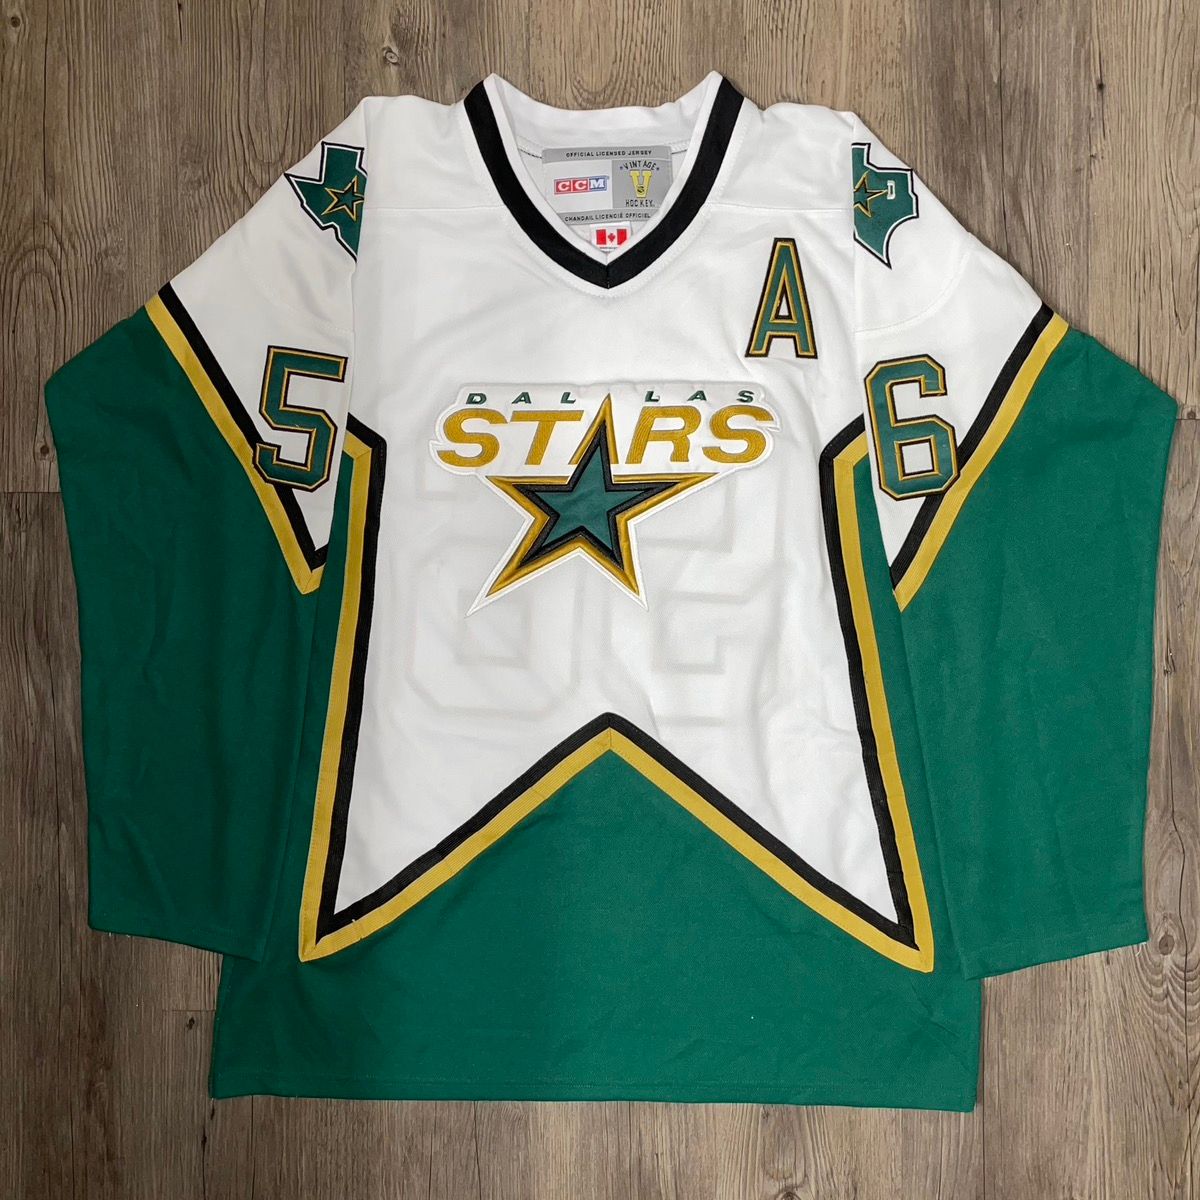 Dallas Stars Zubov night jersey - Size 50